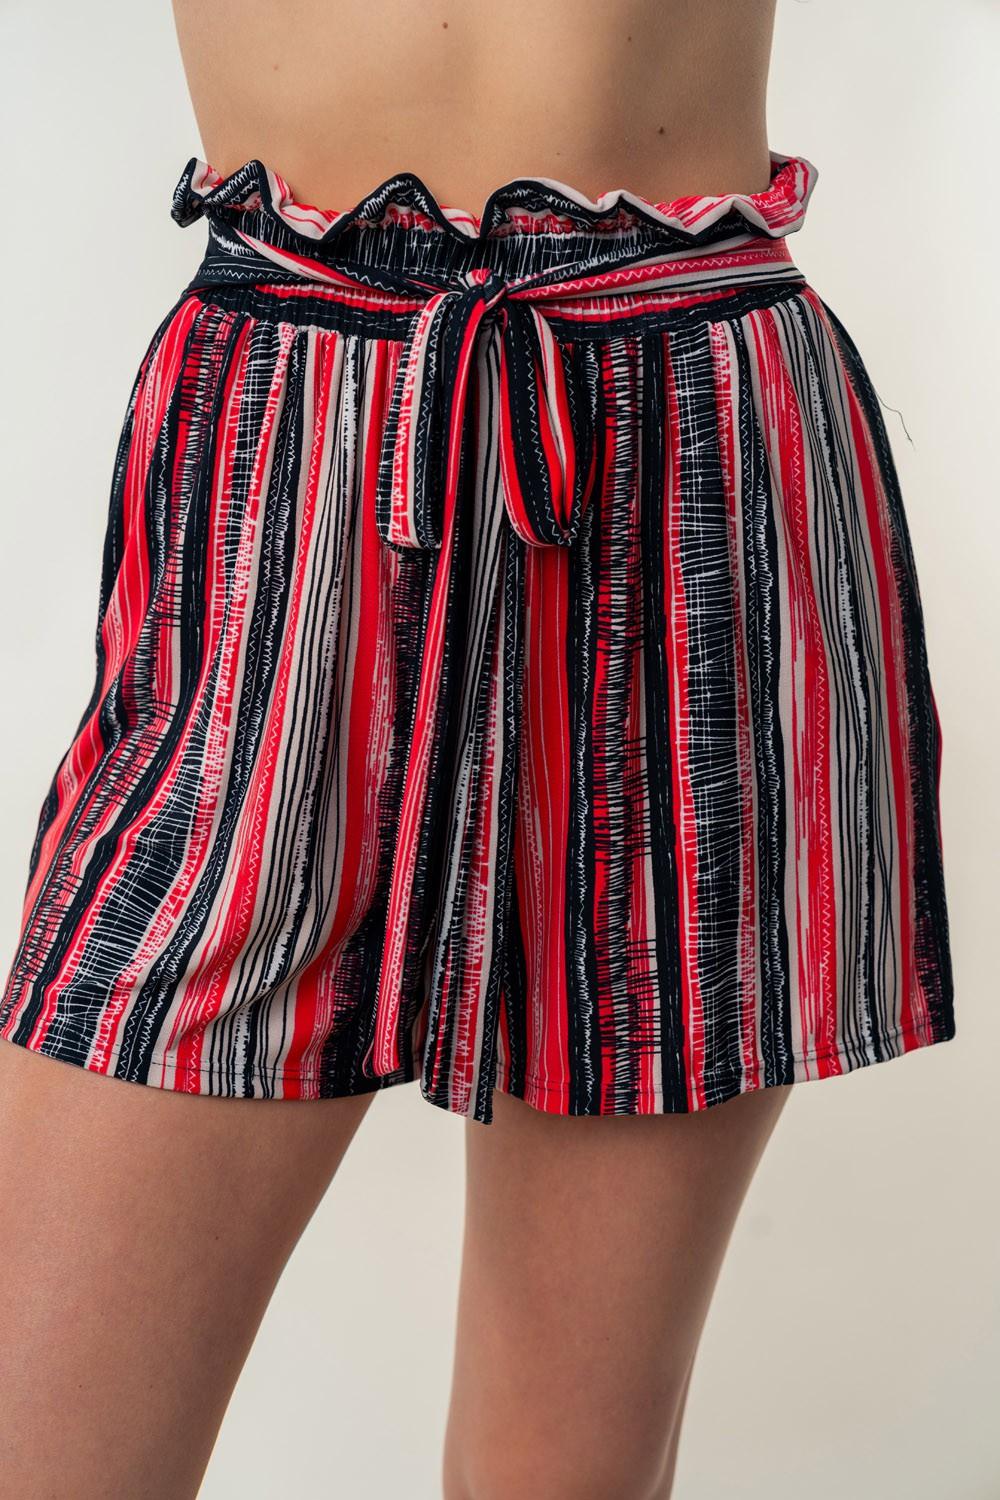 Bona Fide Fashion - Full Size High Waisted Striped Shorts - Women Fashion - Bona Fide Fashion